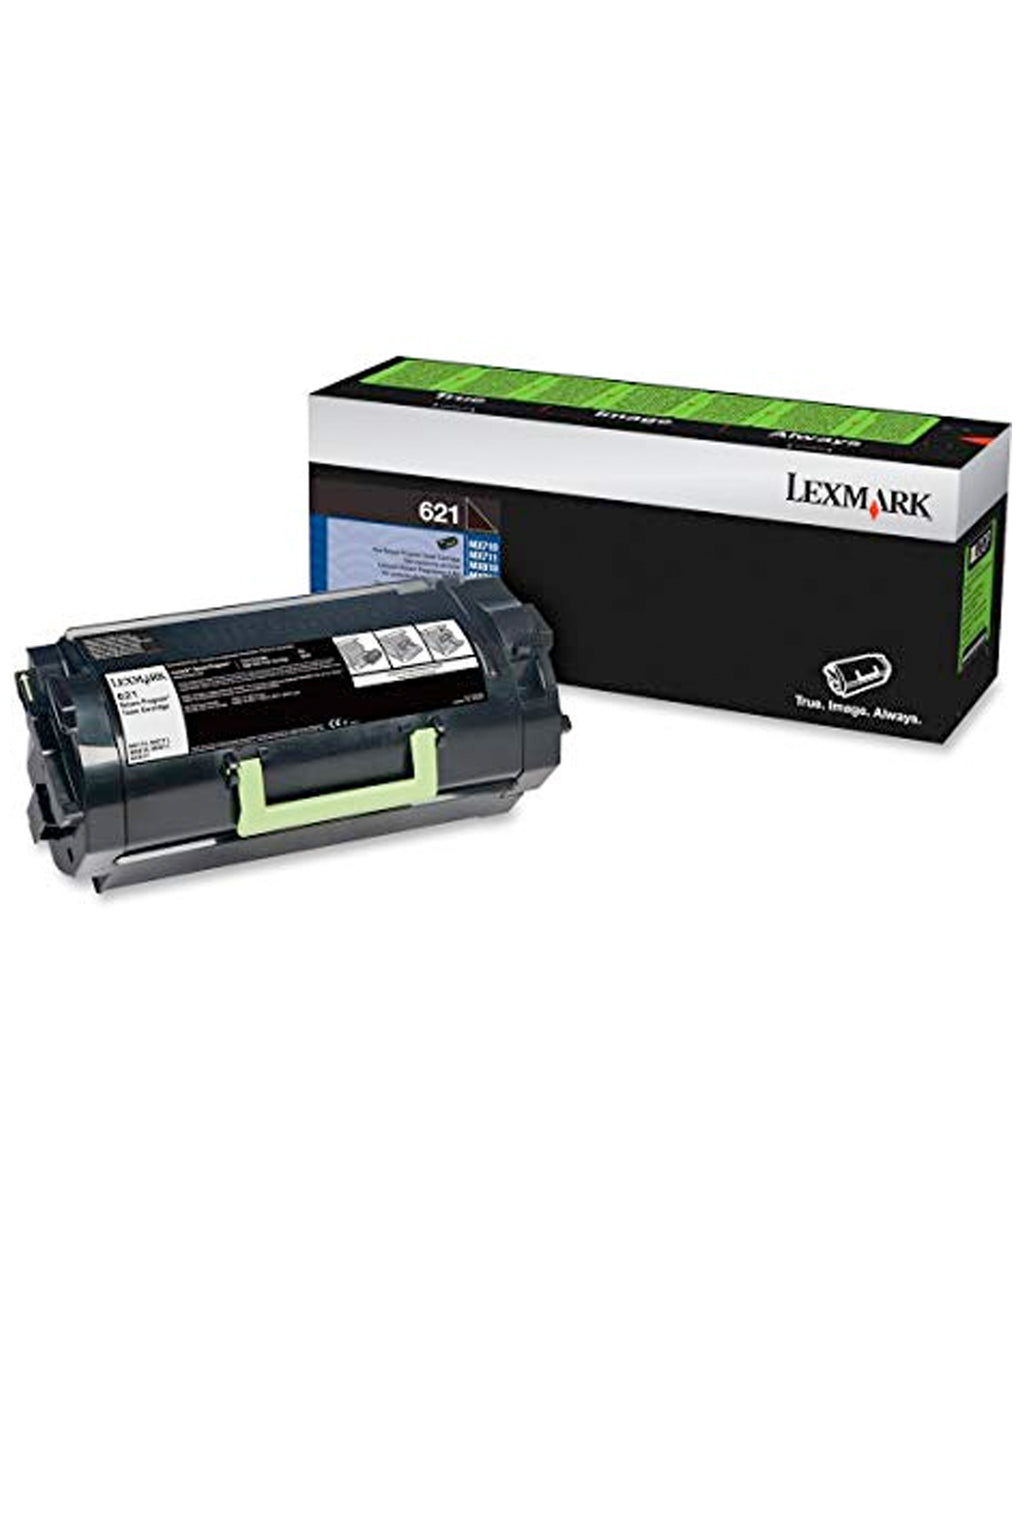 Lexmark 62D1000 Black Laser Toner Cartridge (621) (Genuine)